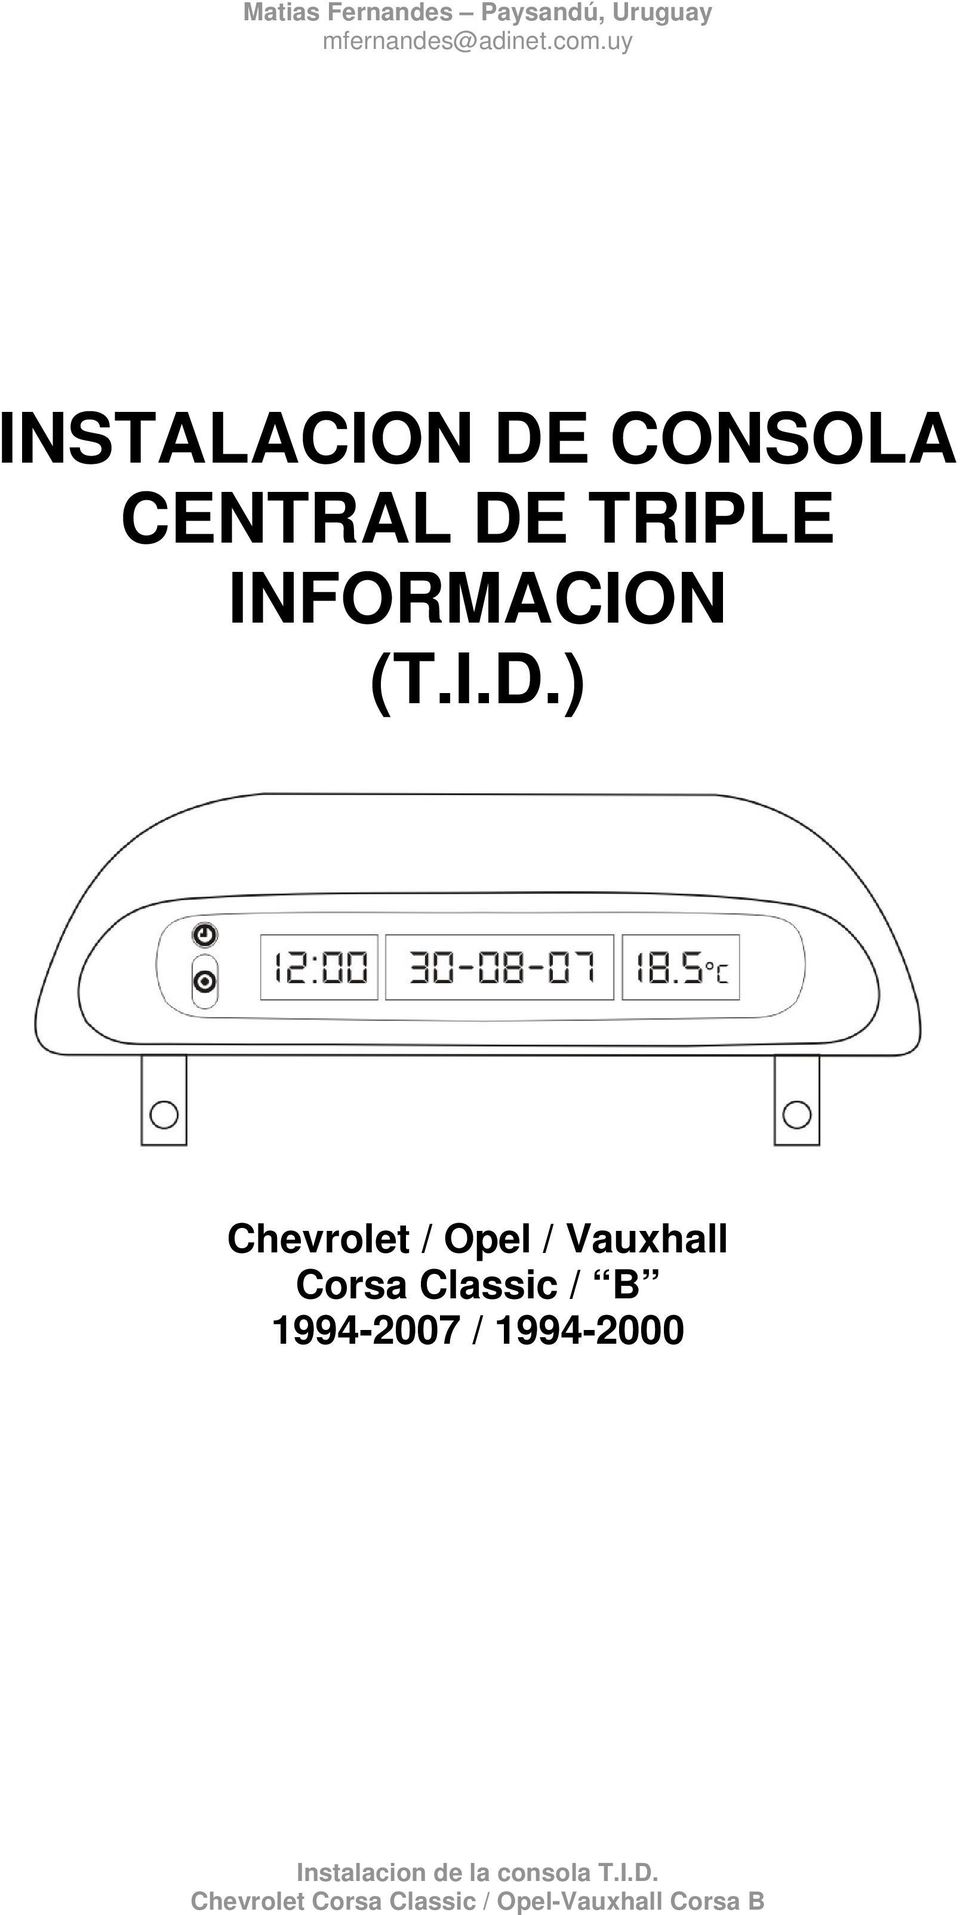 Chevrolet / Opel / Vauxhall